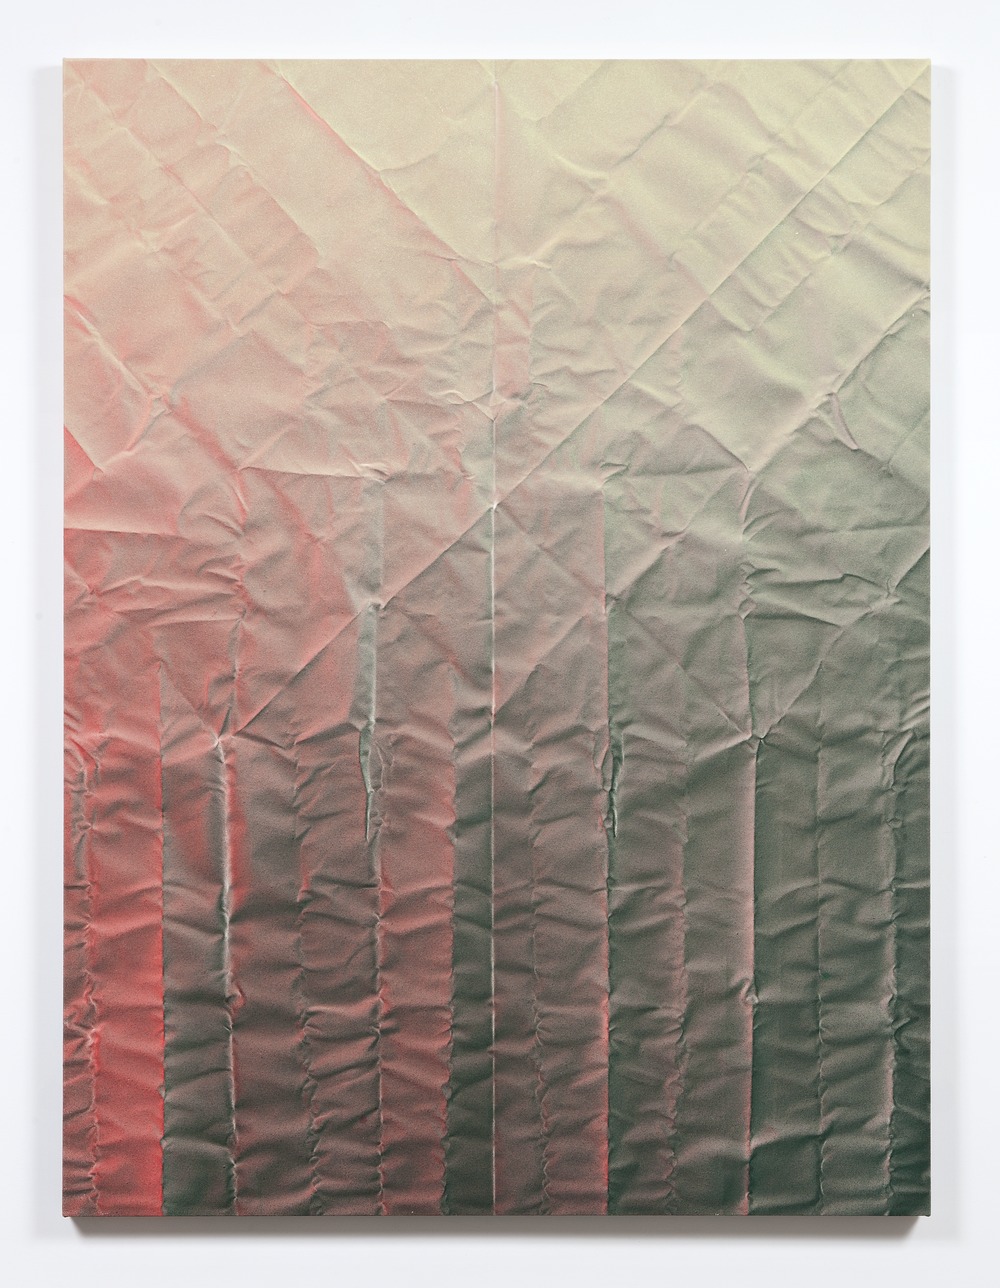 0388 Untitled (Fold)-Tauba-Auerbach-large.jpg